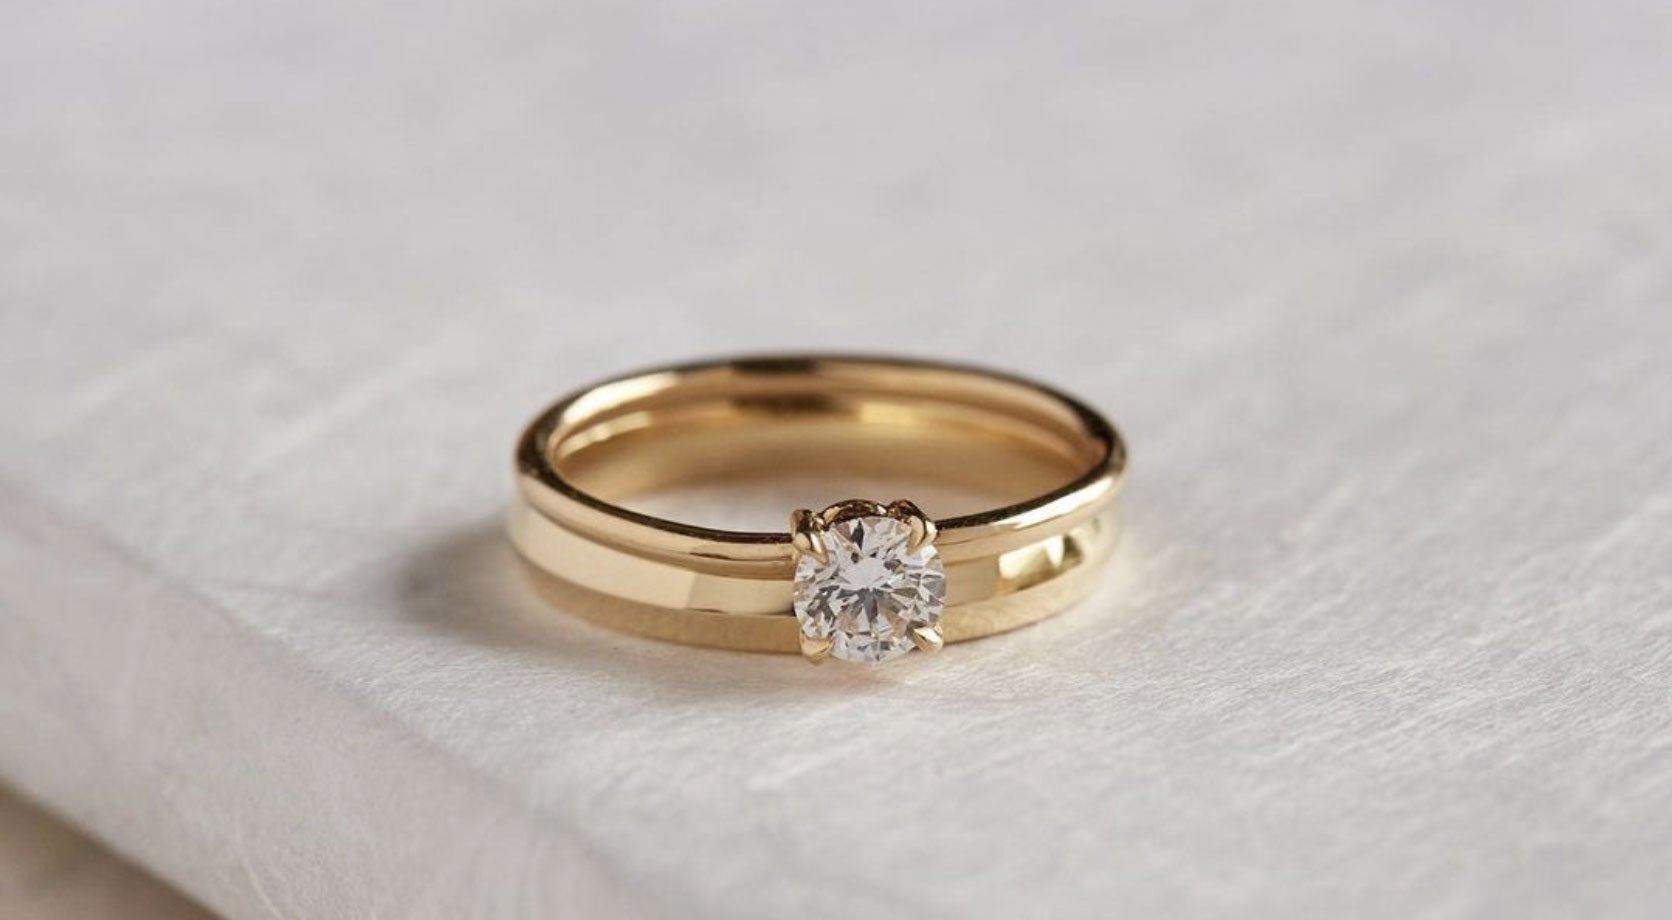 Smaller diamond ring